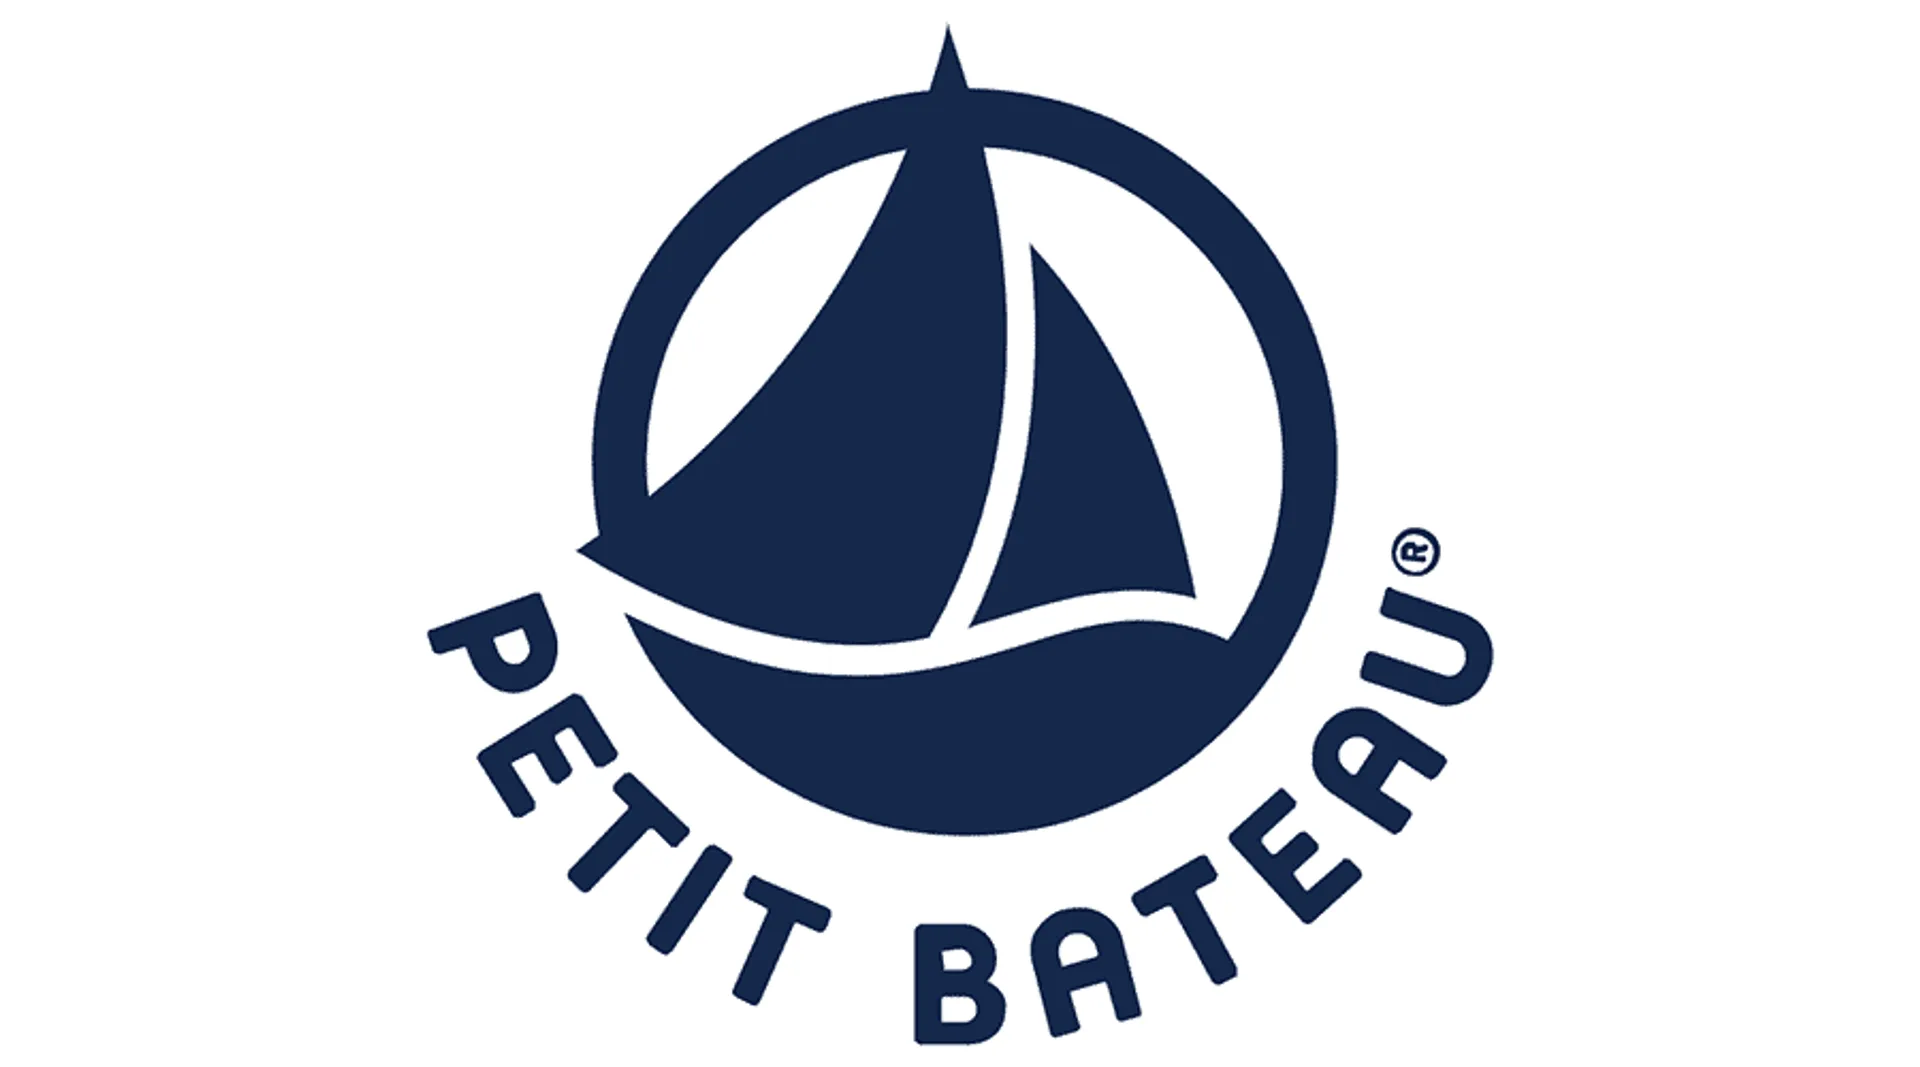 PETIT BATEAU logo de catálogo